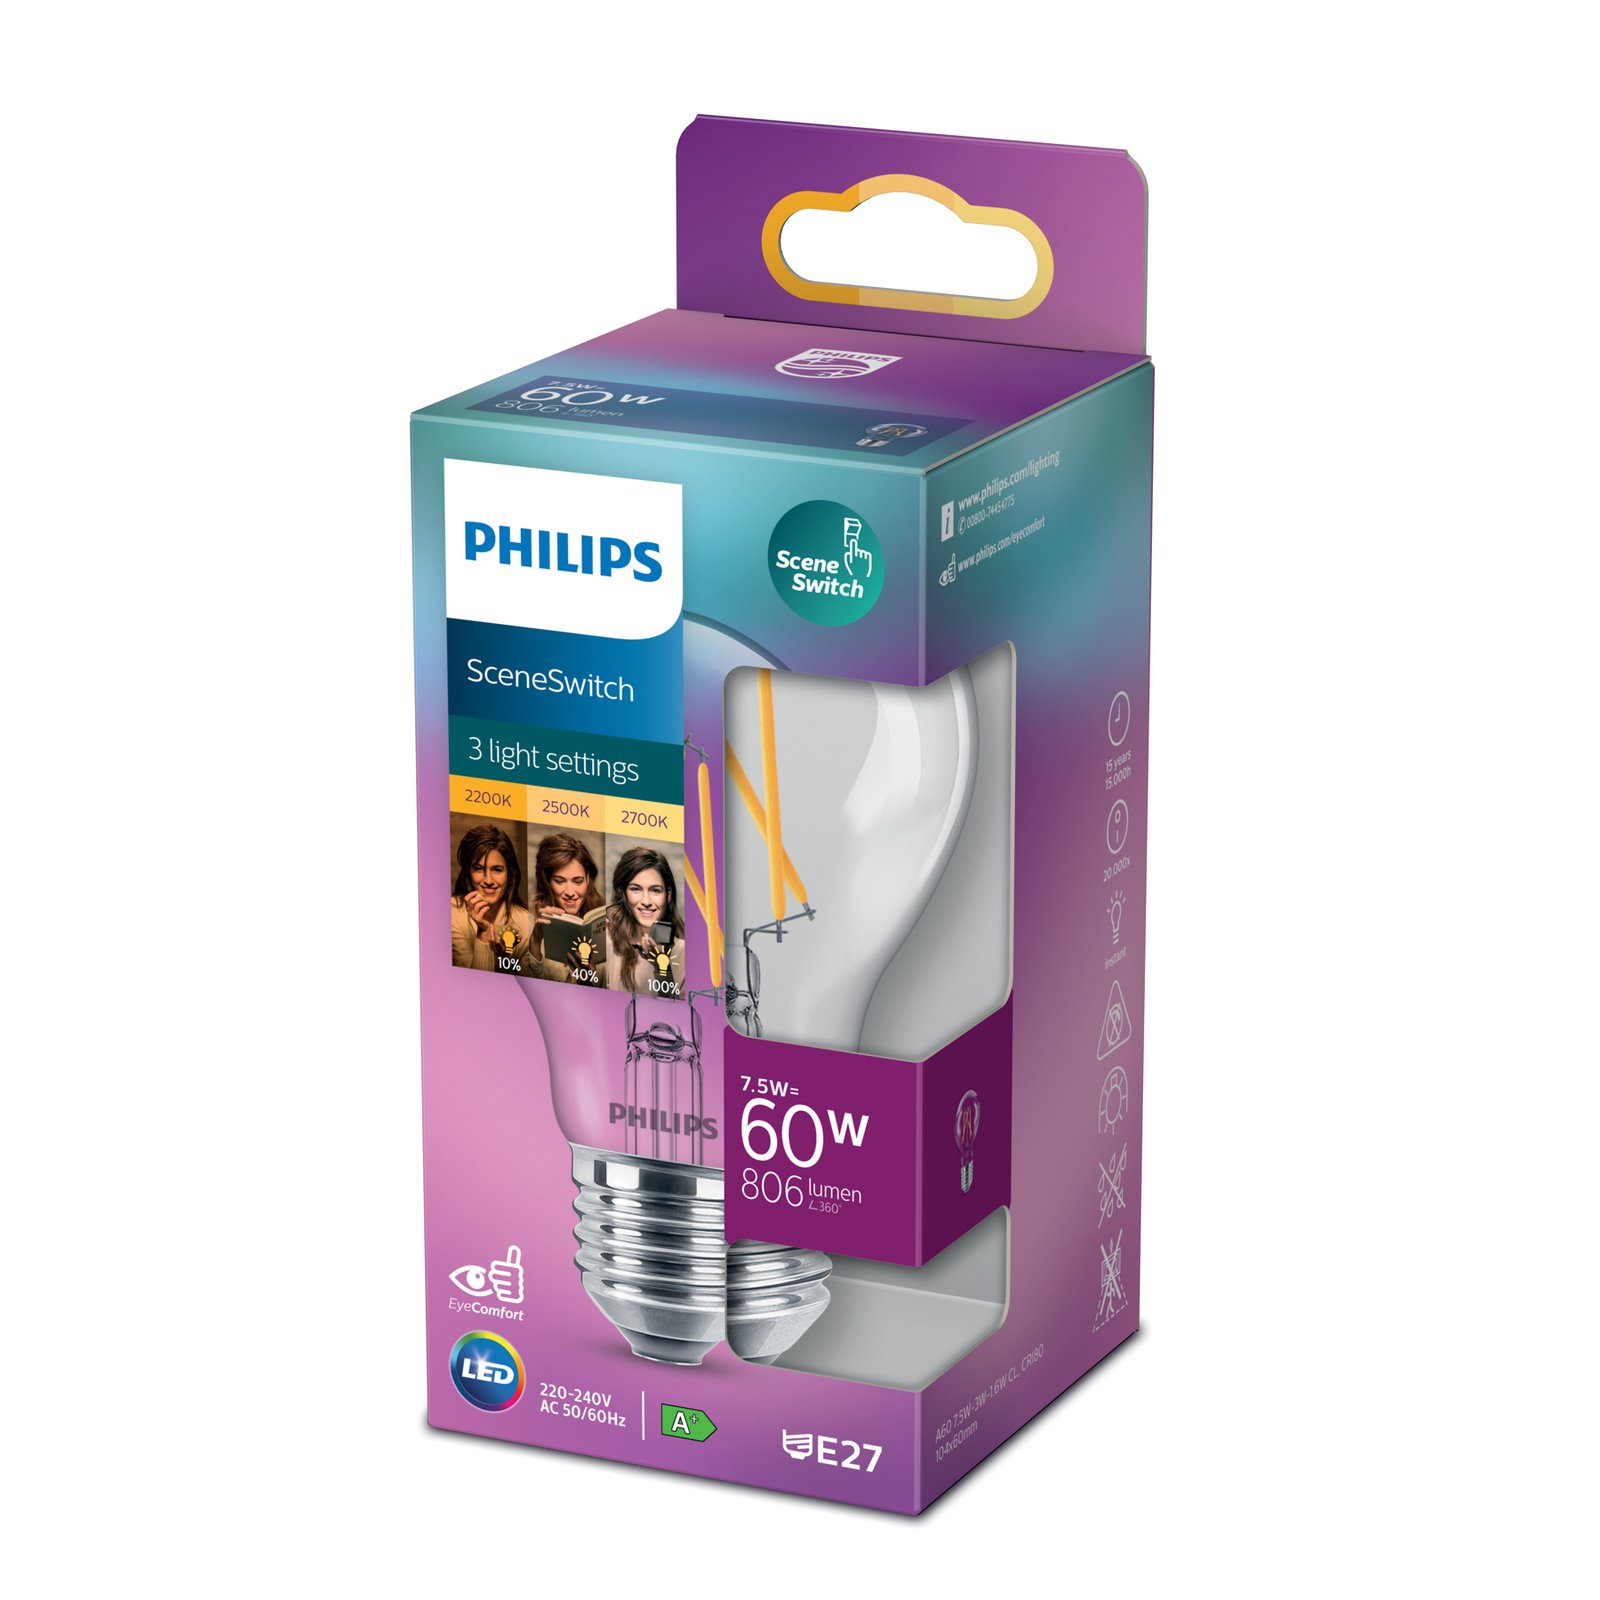 Philips SceneSwitch E27 LED-lamppu 7.5W hehkulanka